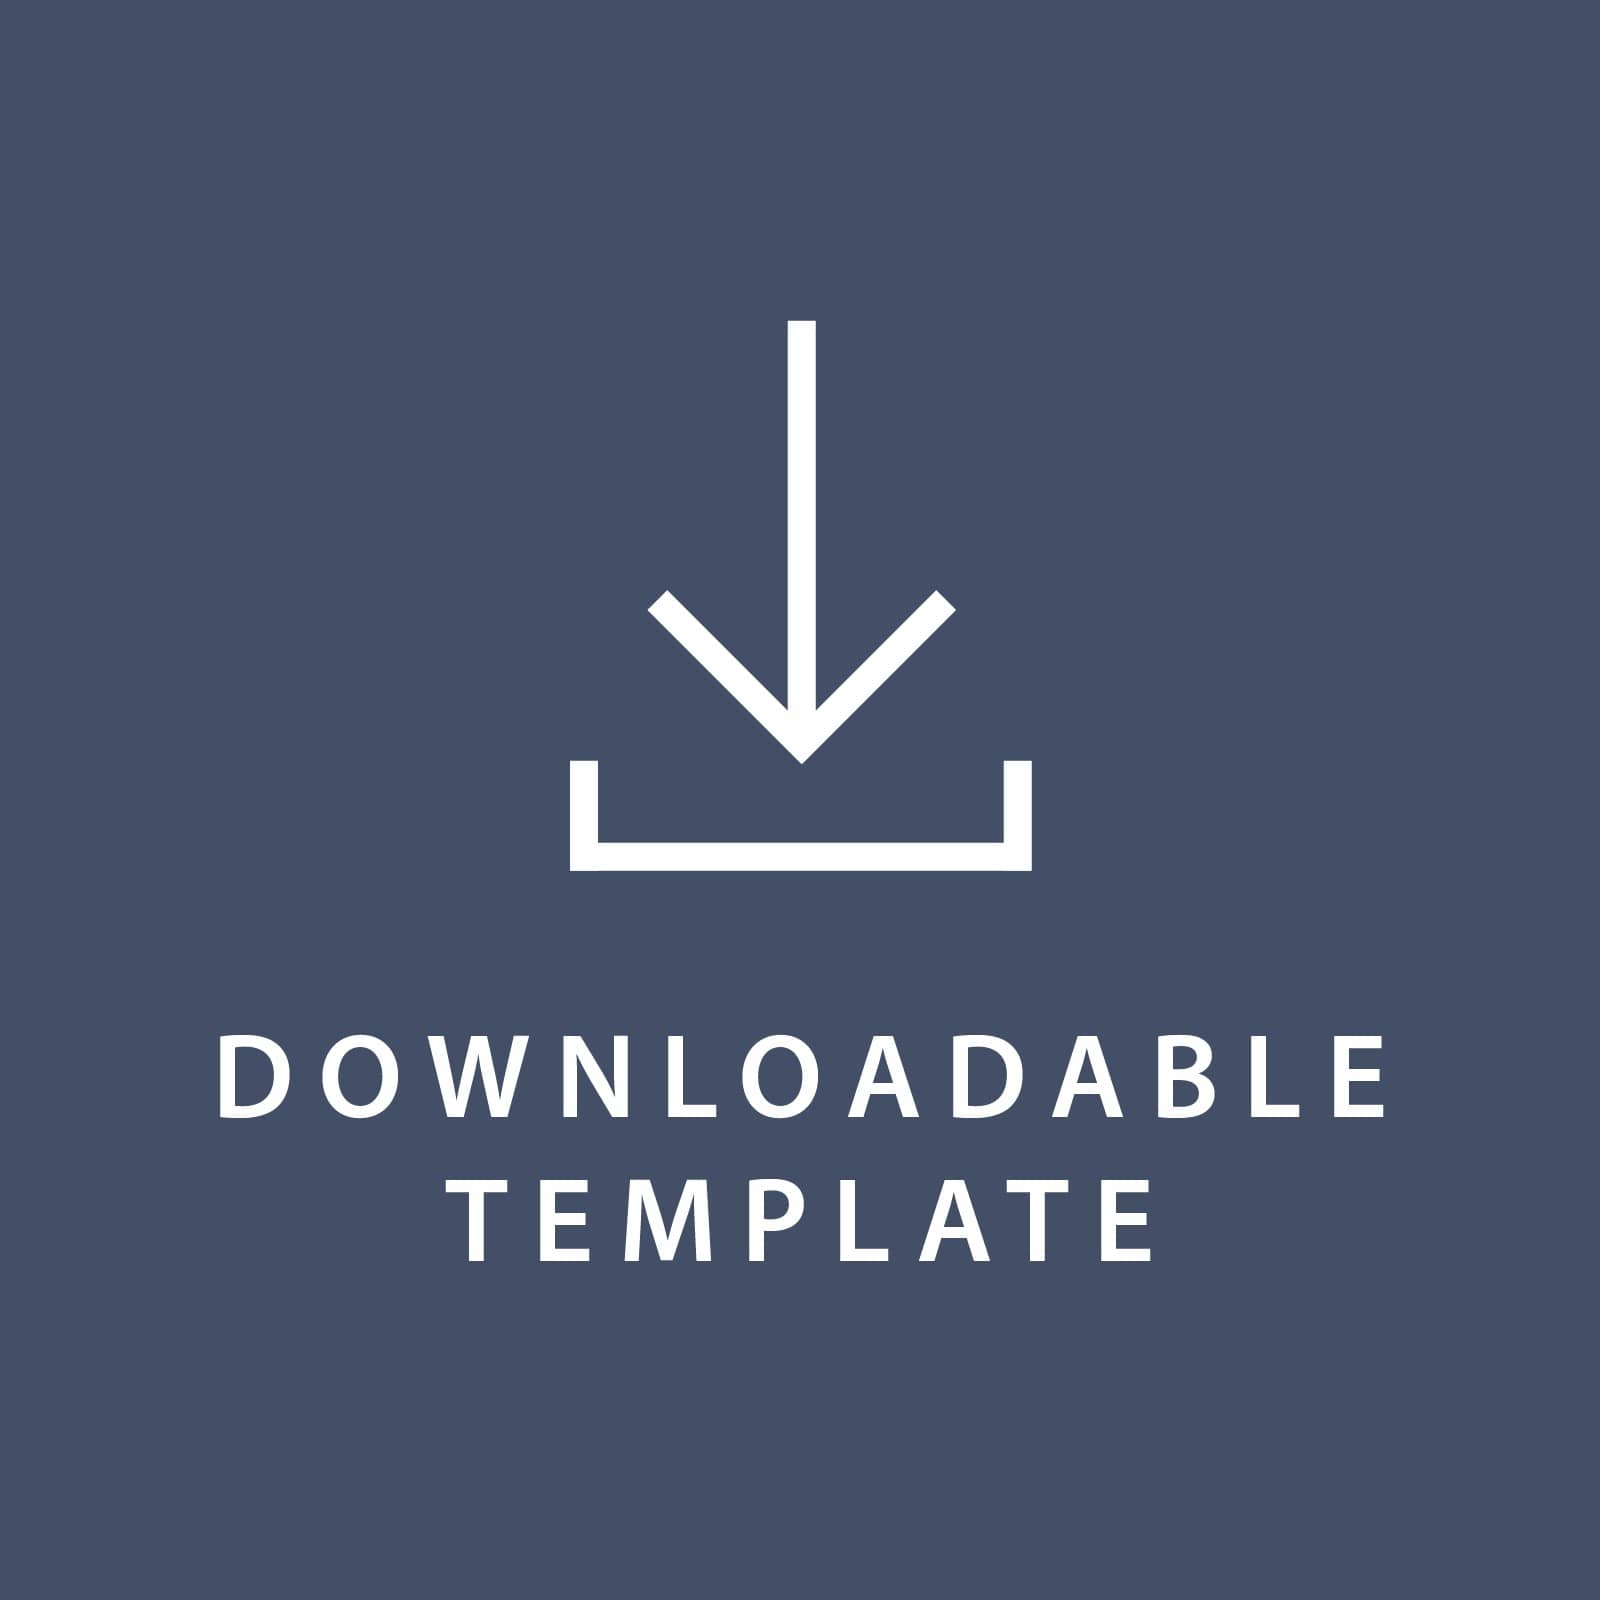 Template for 11 x 8.5 Certificates Gartner Studios Template tmplt0892